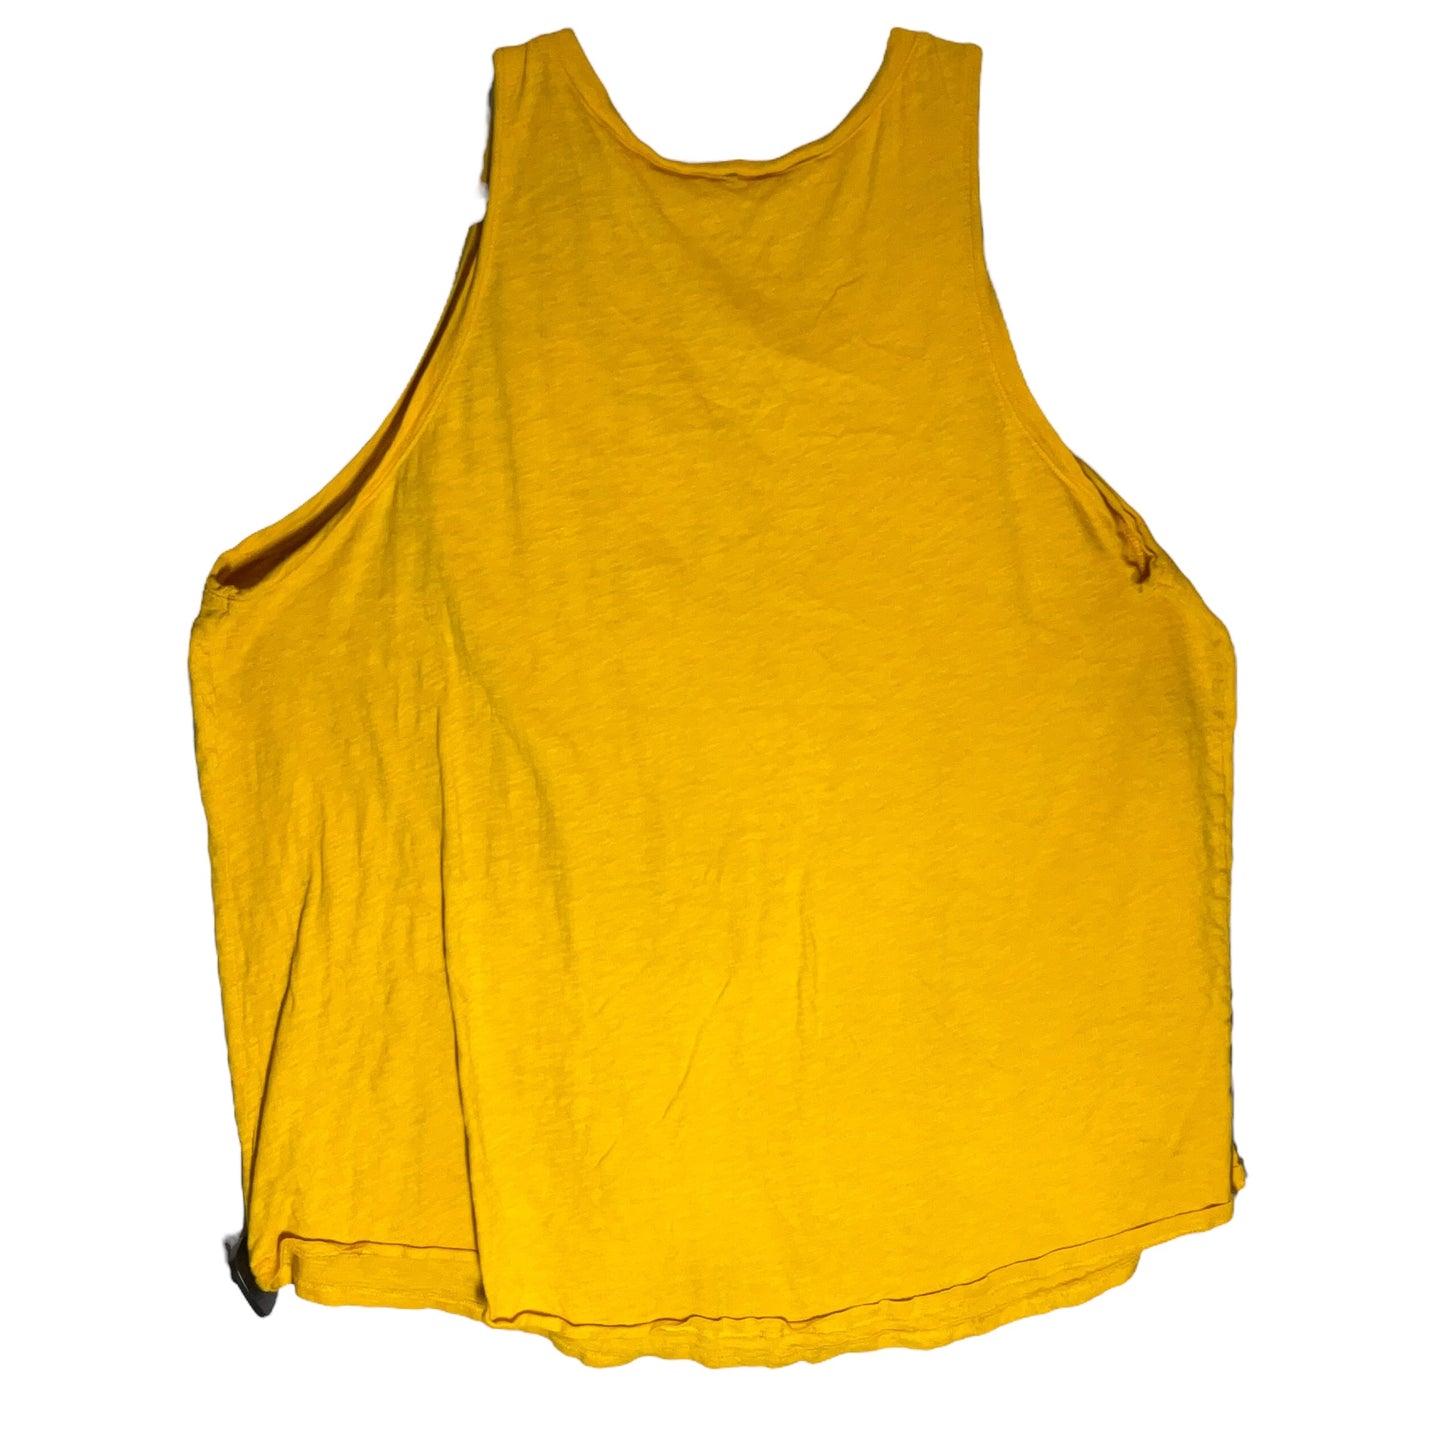 Yellow Top Sleeveless Torrid, Size 4x